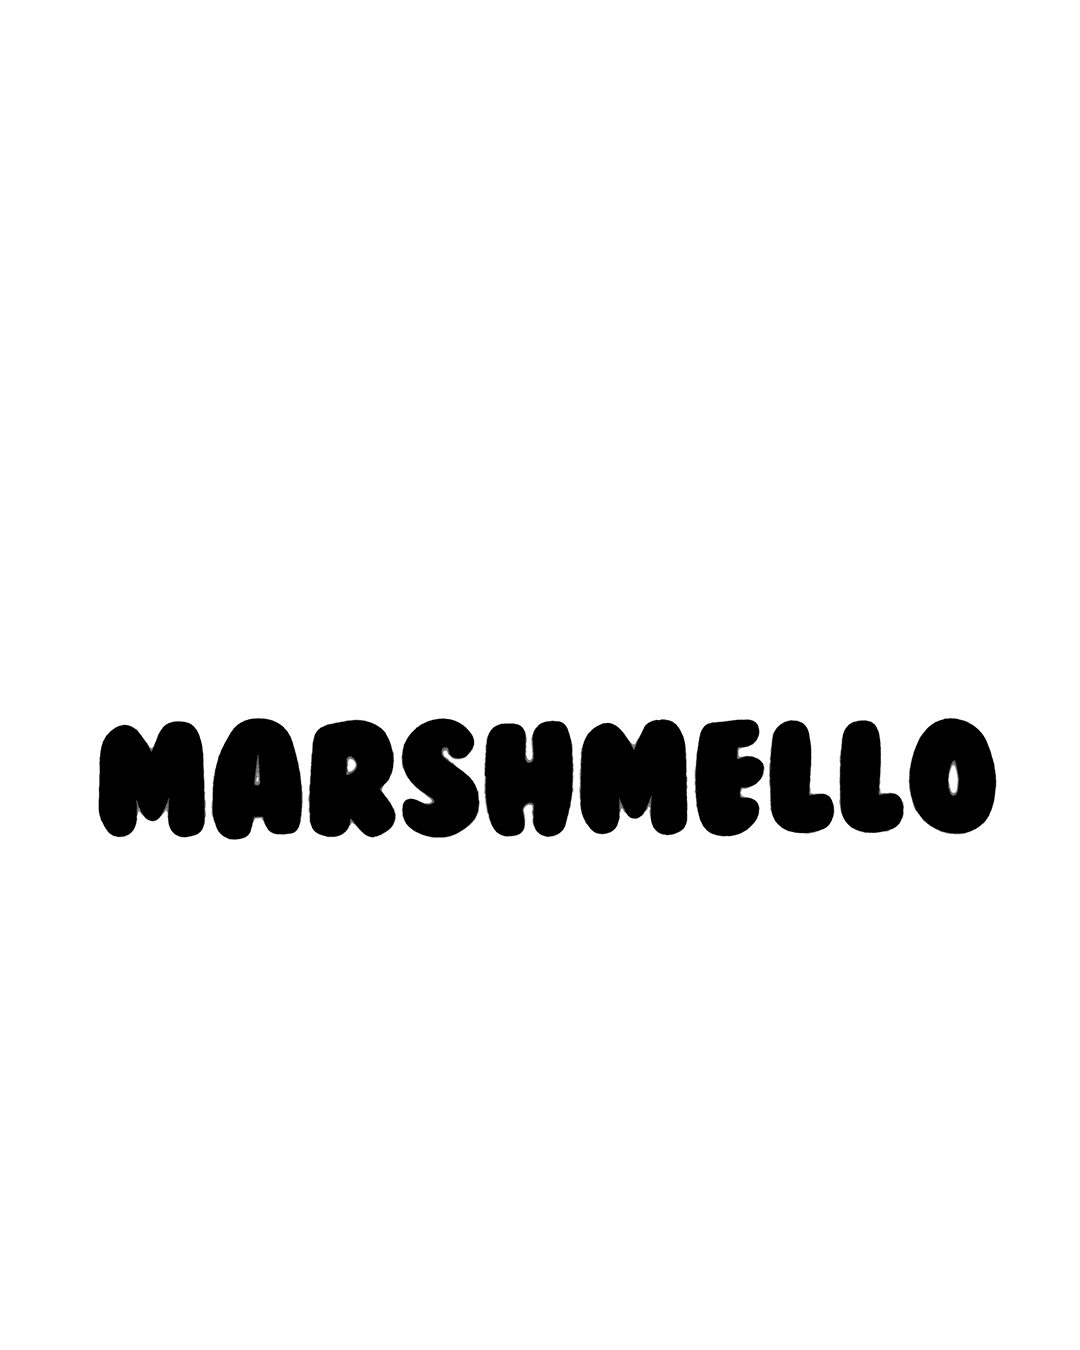 Marshmello Logo Dark Samsung Galaxy Note 5 Case - CASESHUNTER